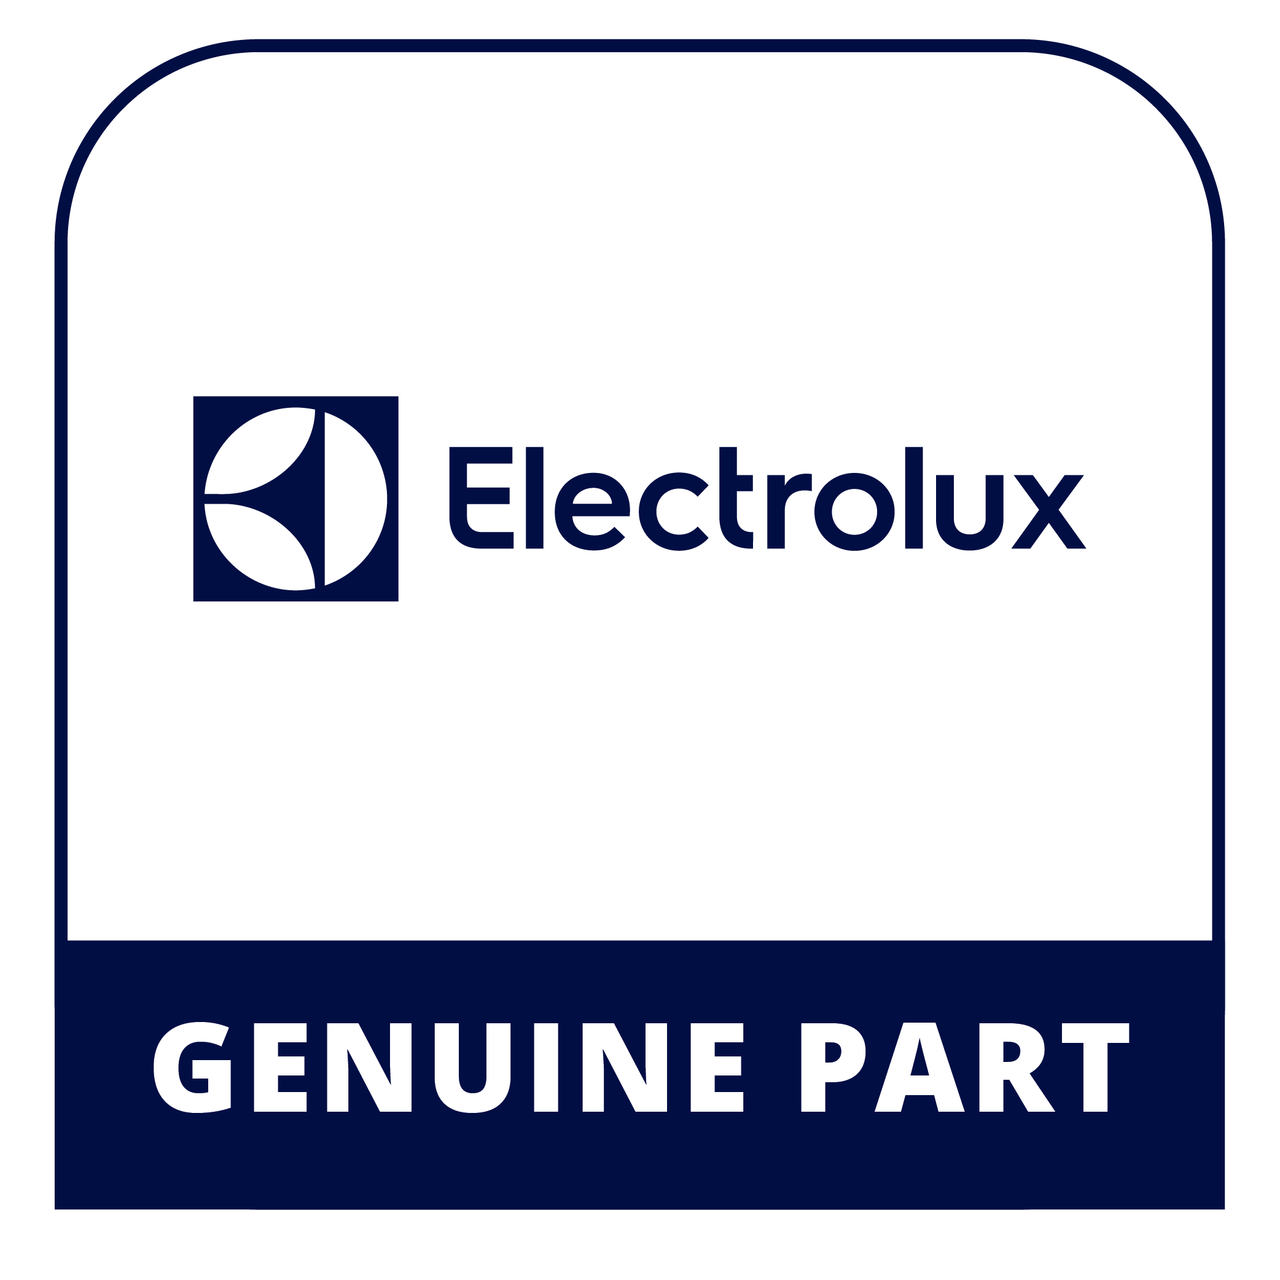 Frigidaire - Electrolux 316605362 Panel - Genuine Electrolux Part